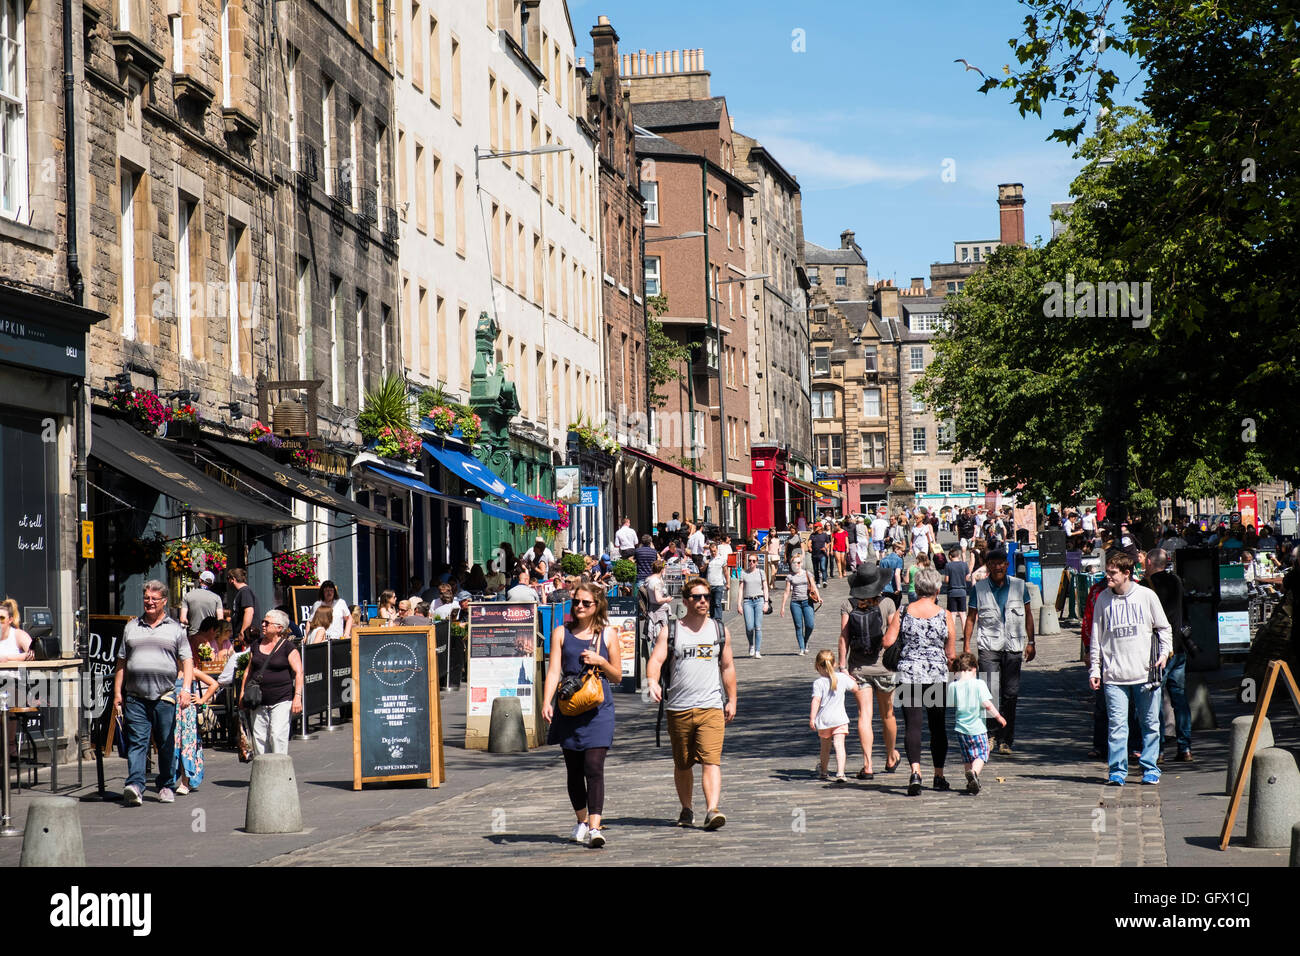 View along busy historic street in Grassmarket district of Edinburgh , Scotland, United Kingdom Stock Photo